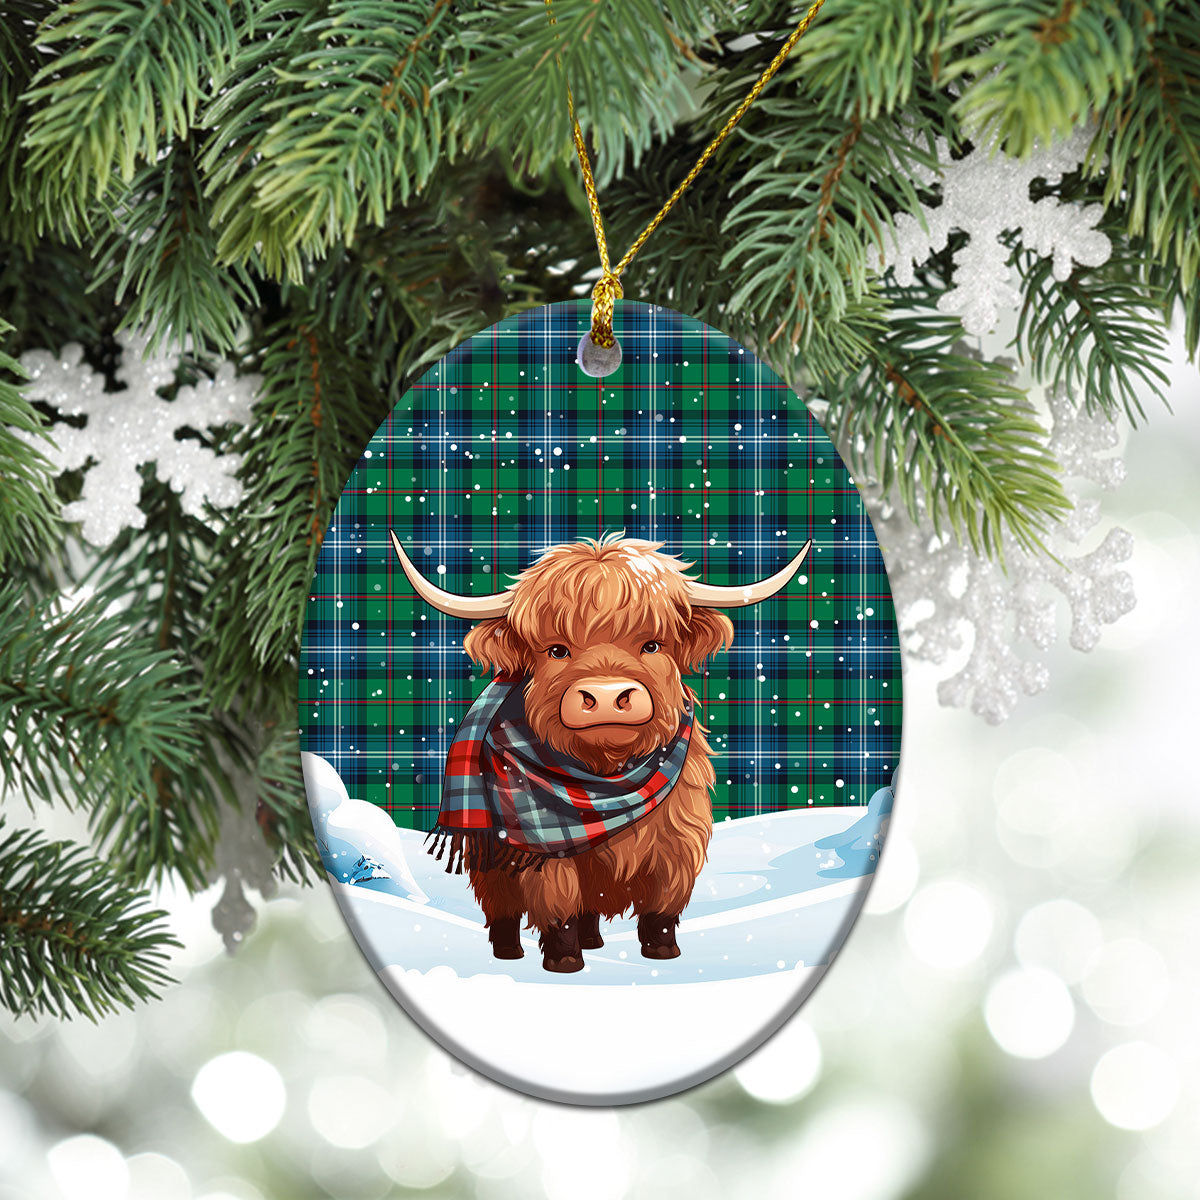 Urquhart Ancient Tartan Christmas Ceramic Ornament - Highland Cows Snow Style